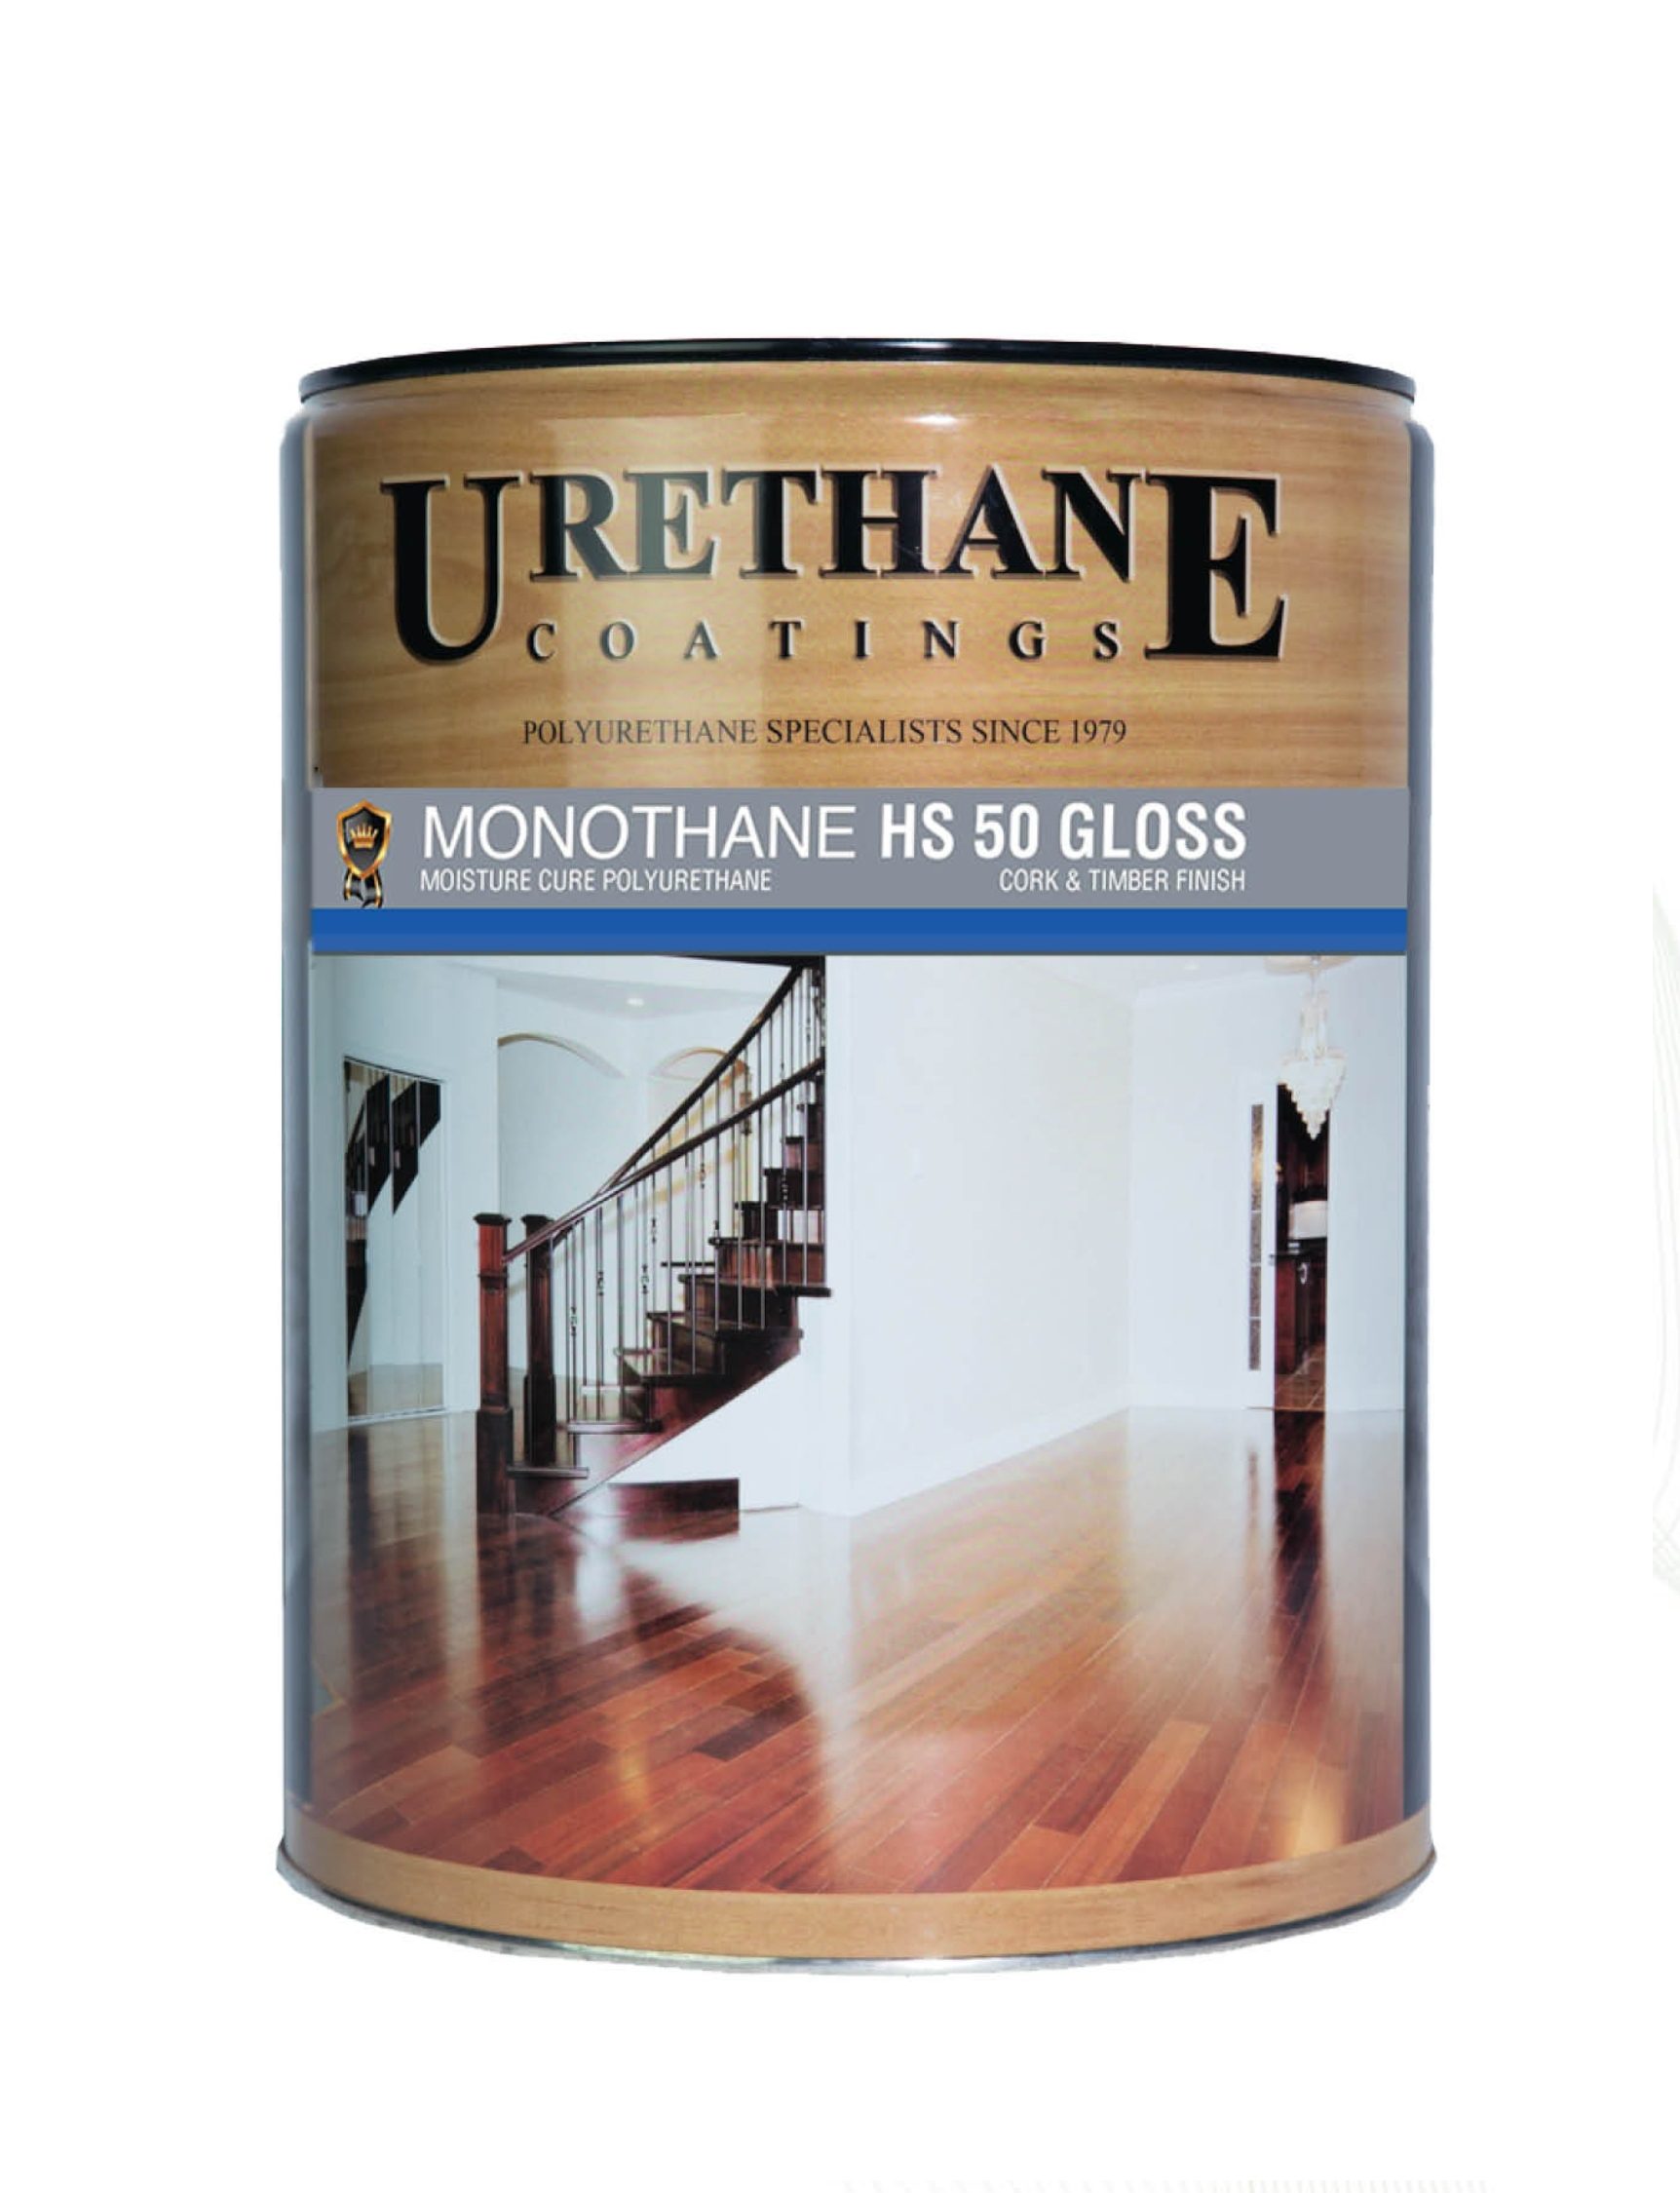 Urethane Coatings | Monothane HS 50 Gloss